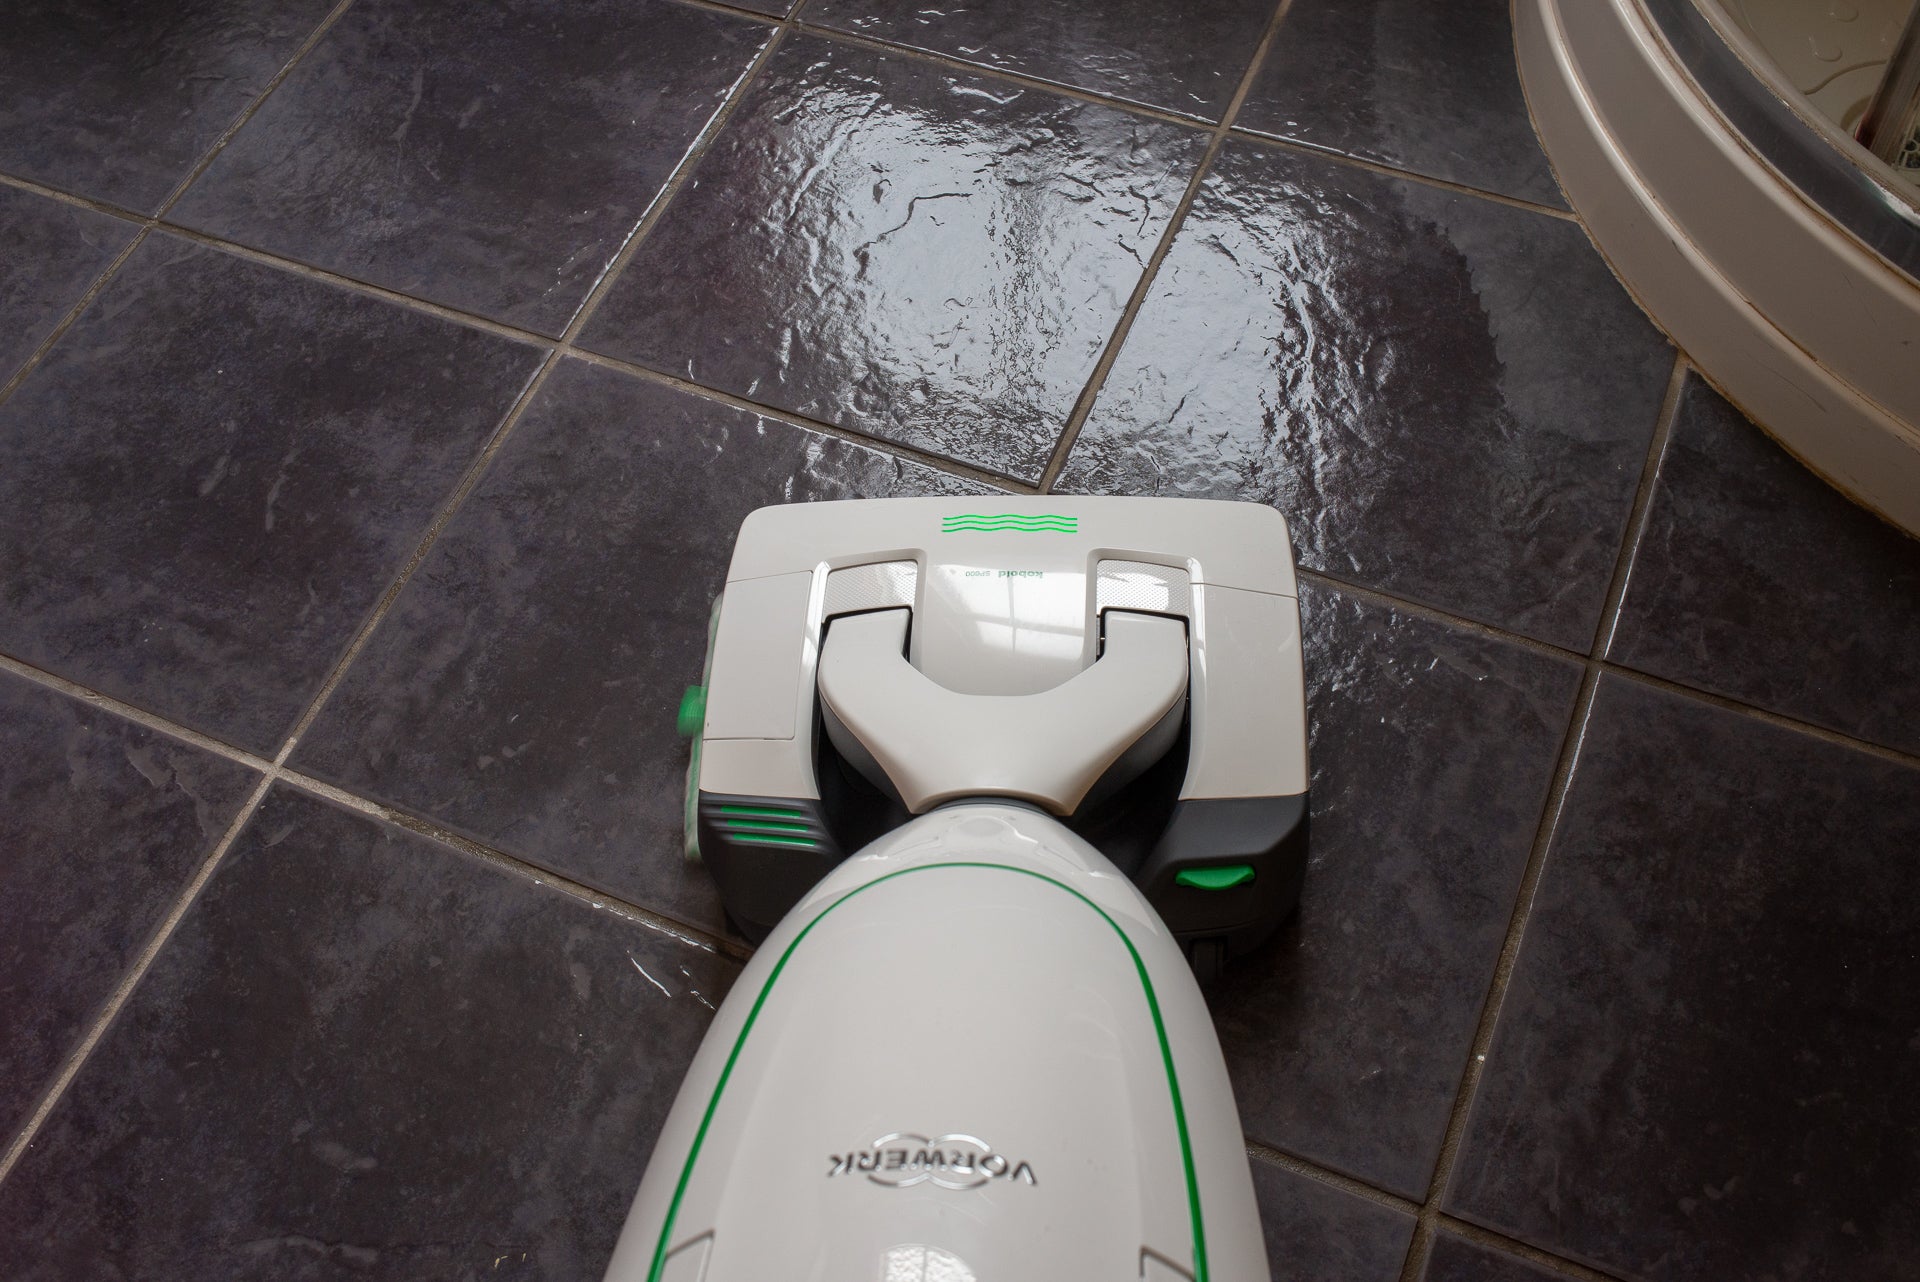 Vorwerk Kobold VK200 vacuum cleaner on a tiled floor.